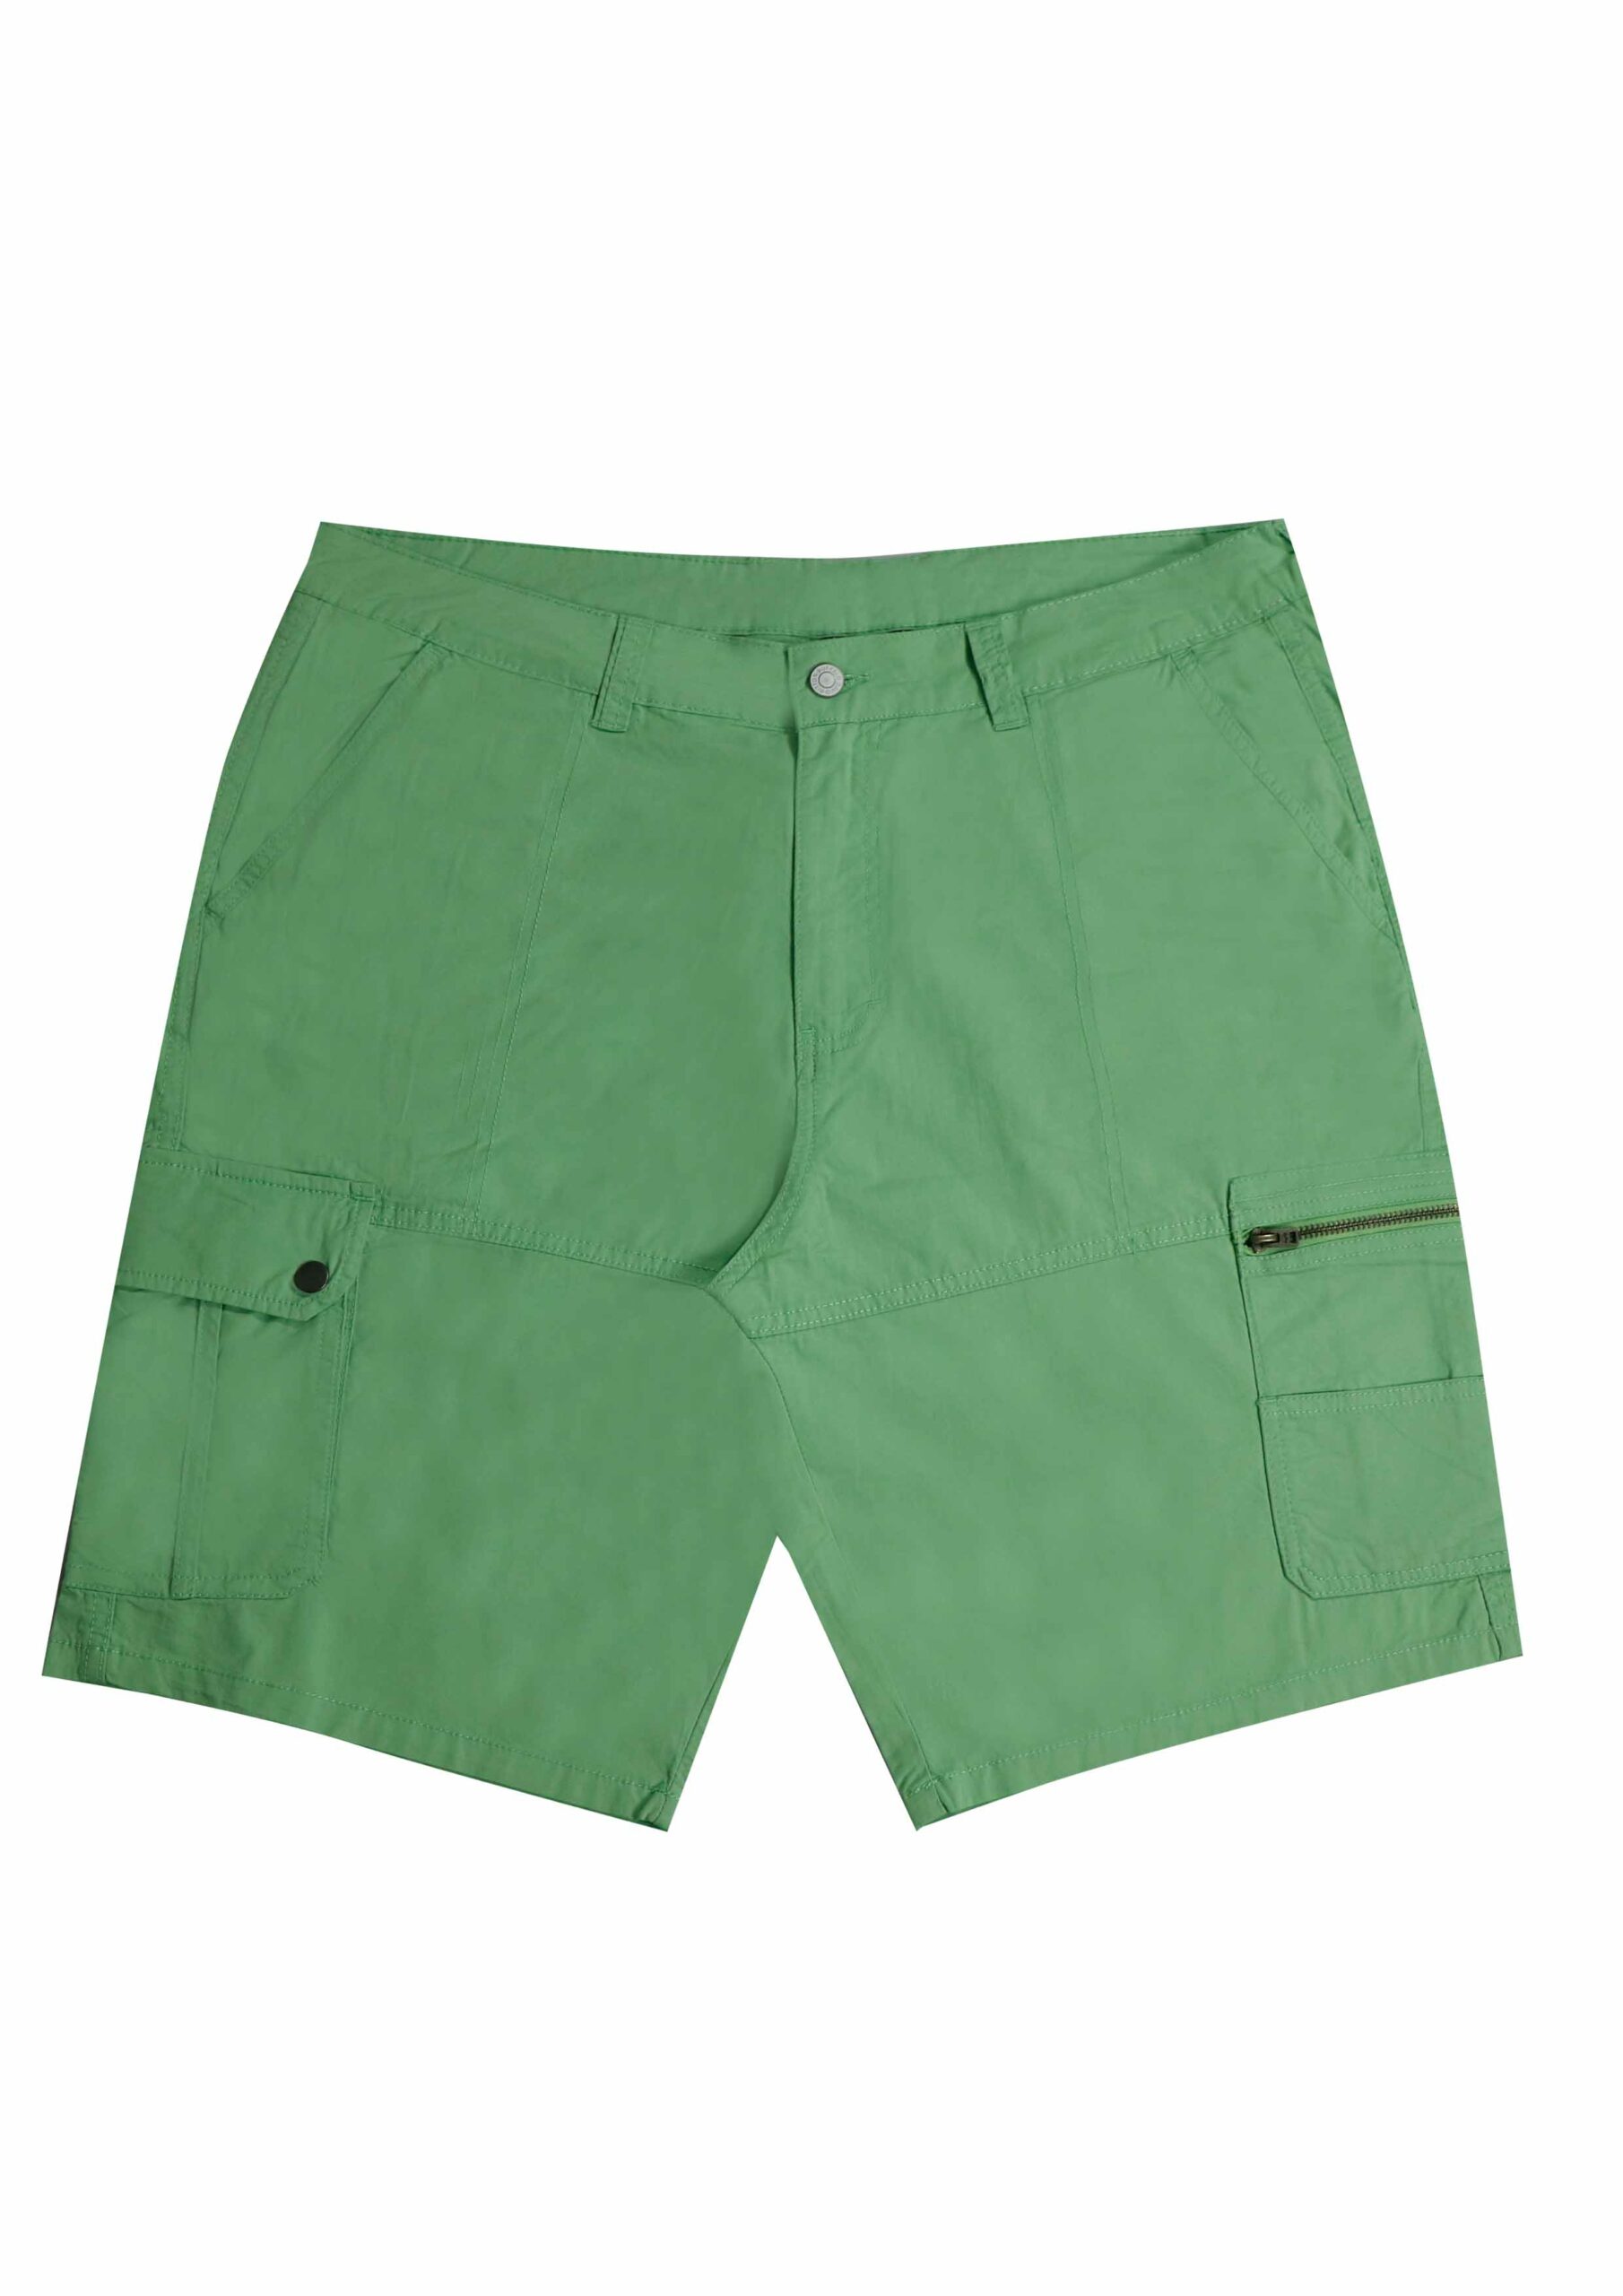 Men’s Shorts - Artisan Outfitters Ltd